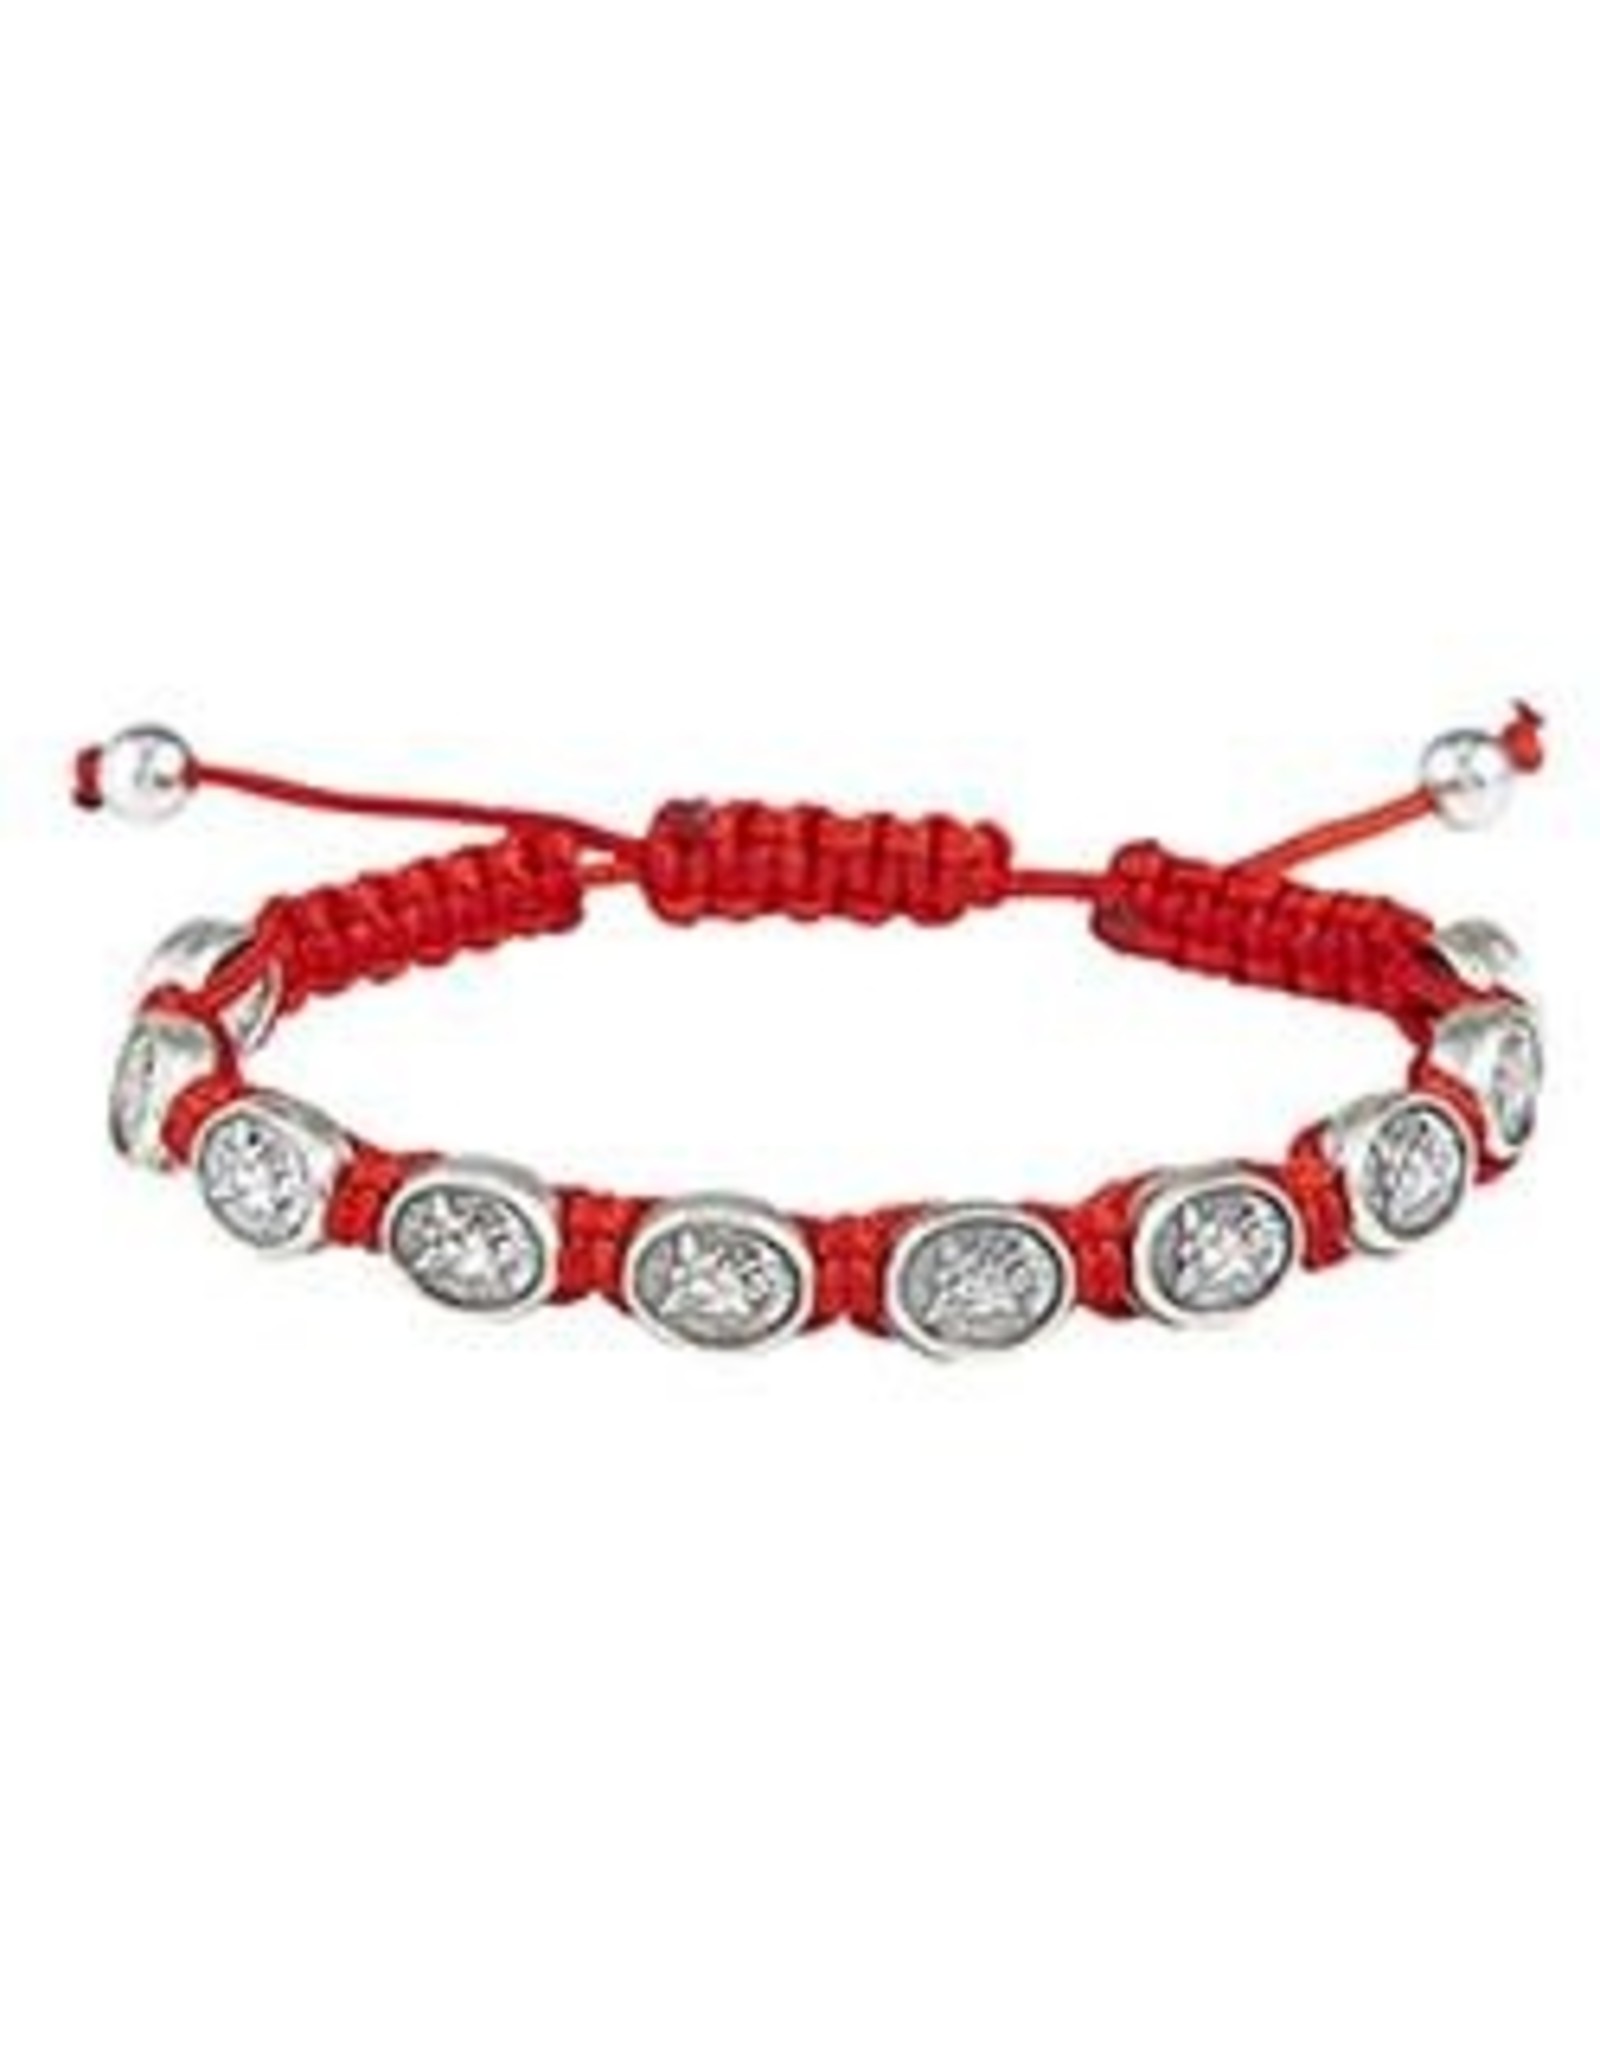 CBC - A St. Michael Medal Cord Bracelet - Red